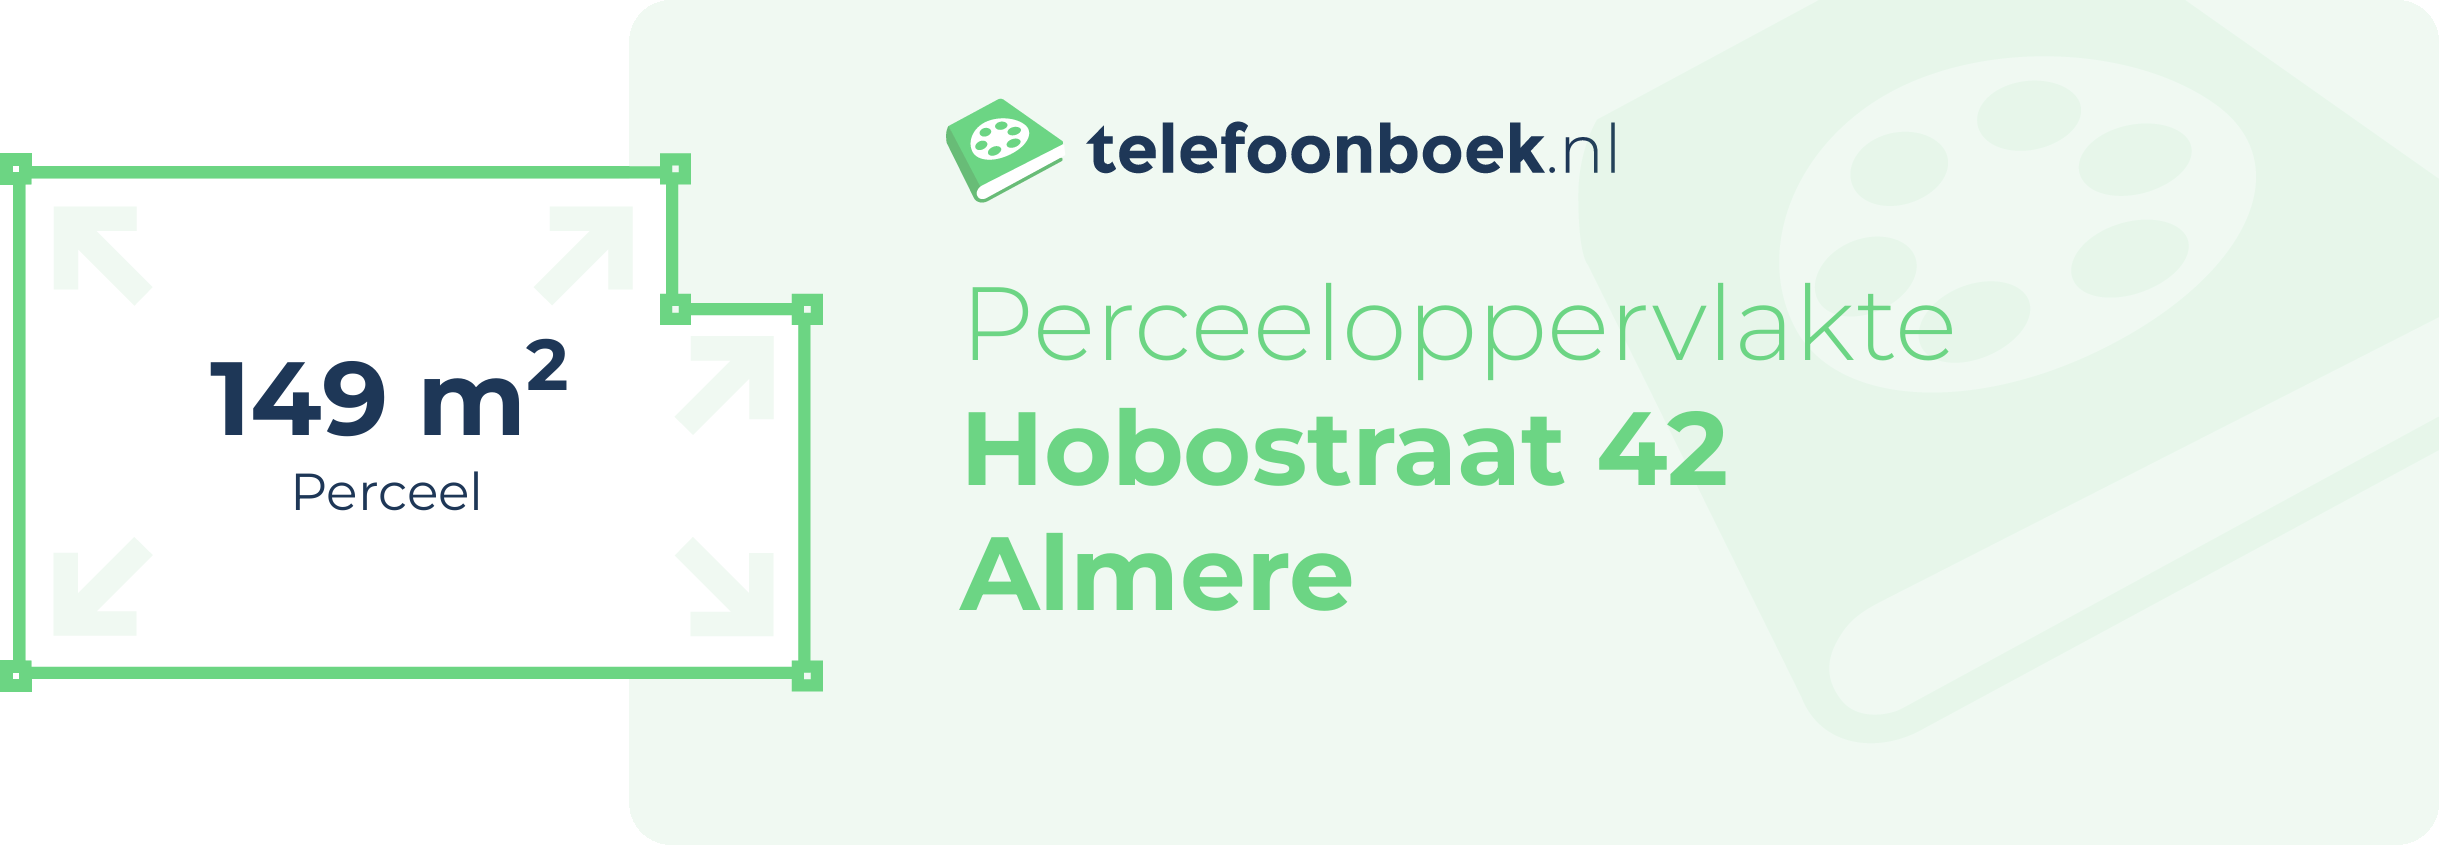 Perceeloppervlakte Hobostraat 42 Almere